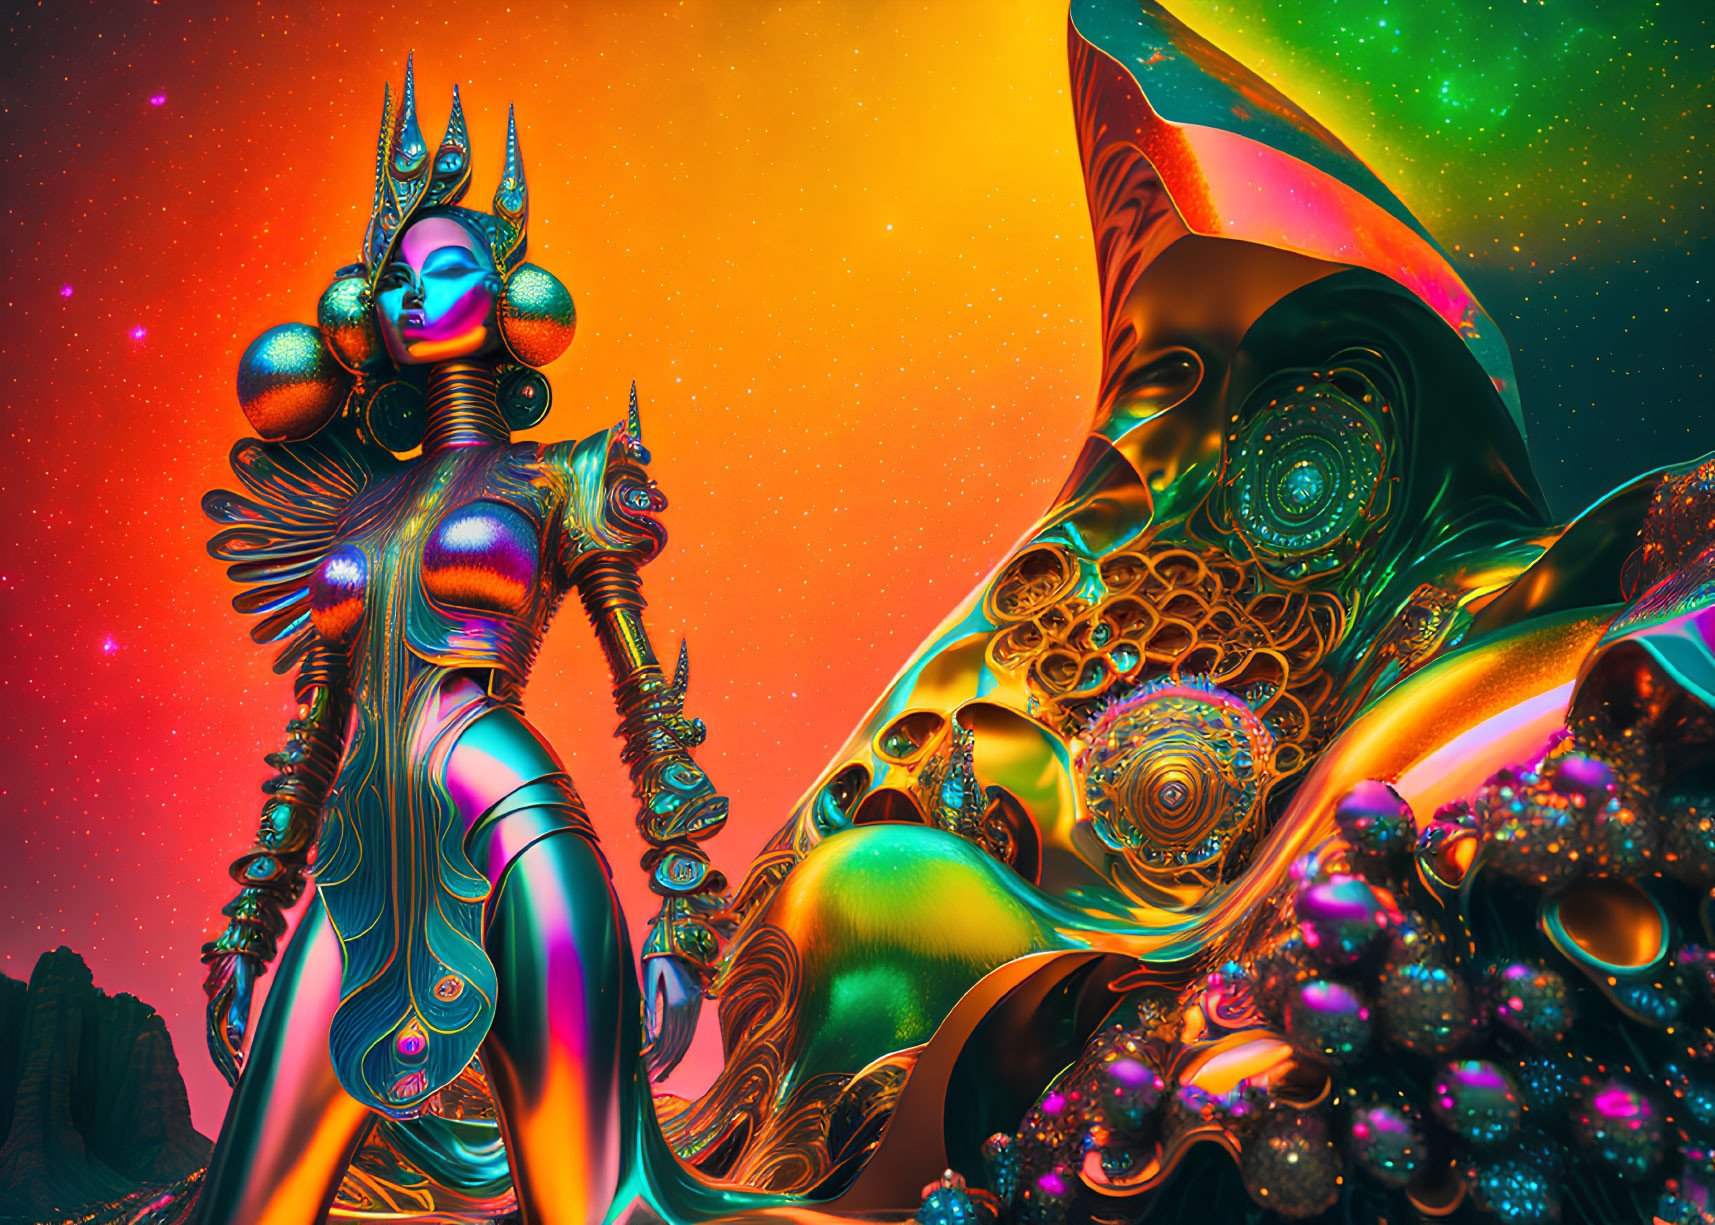 Colorful futuristic digital art of armored female figure in surreal landscape